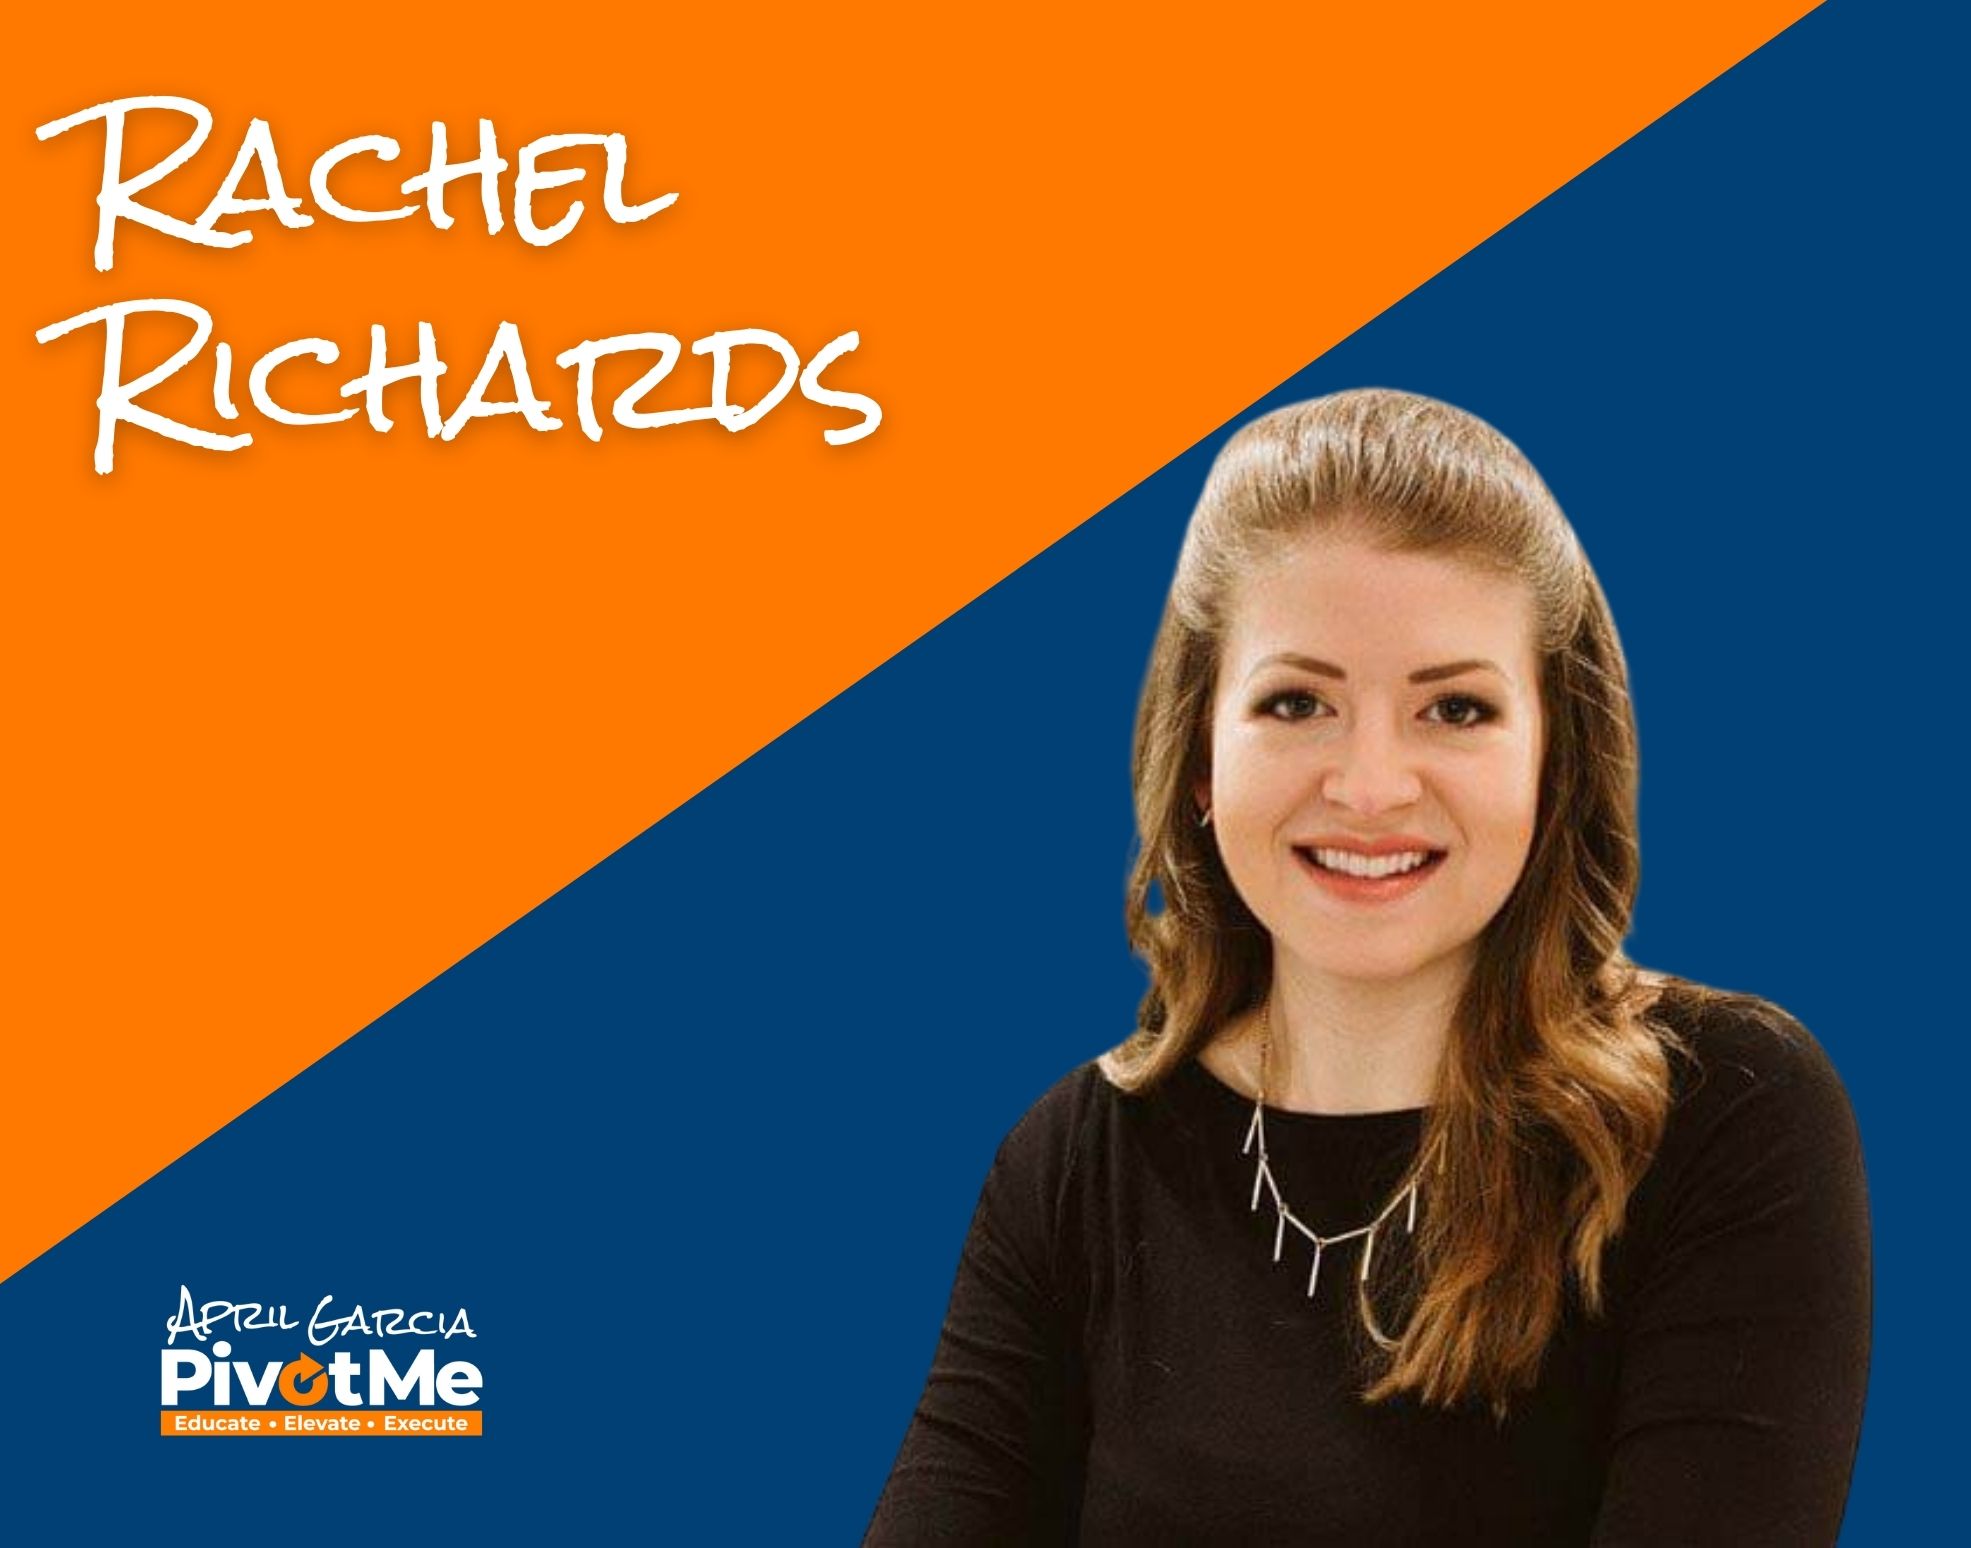 Rachel Richards